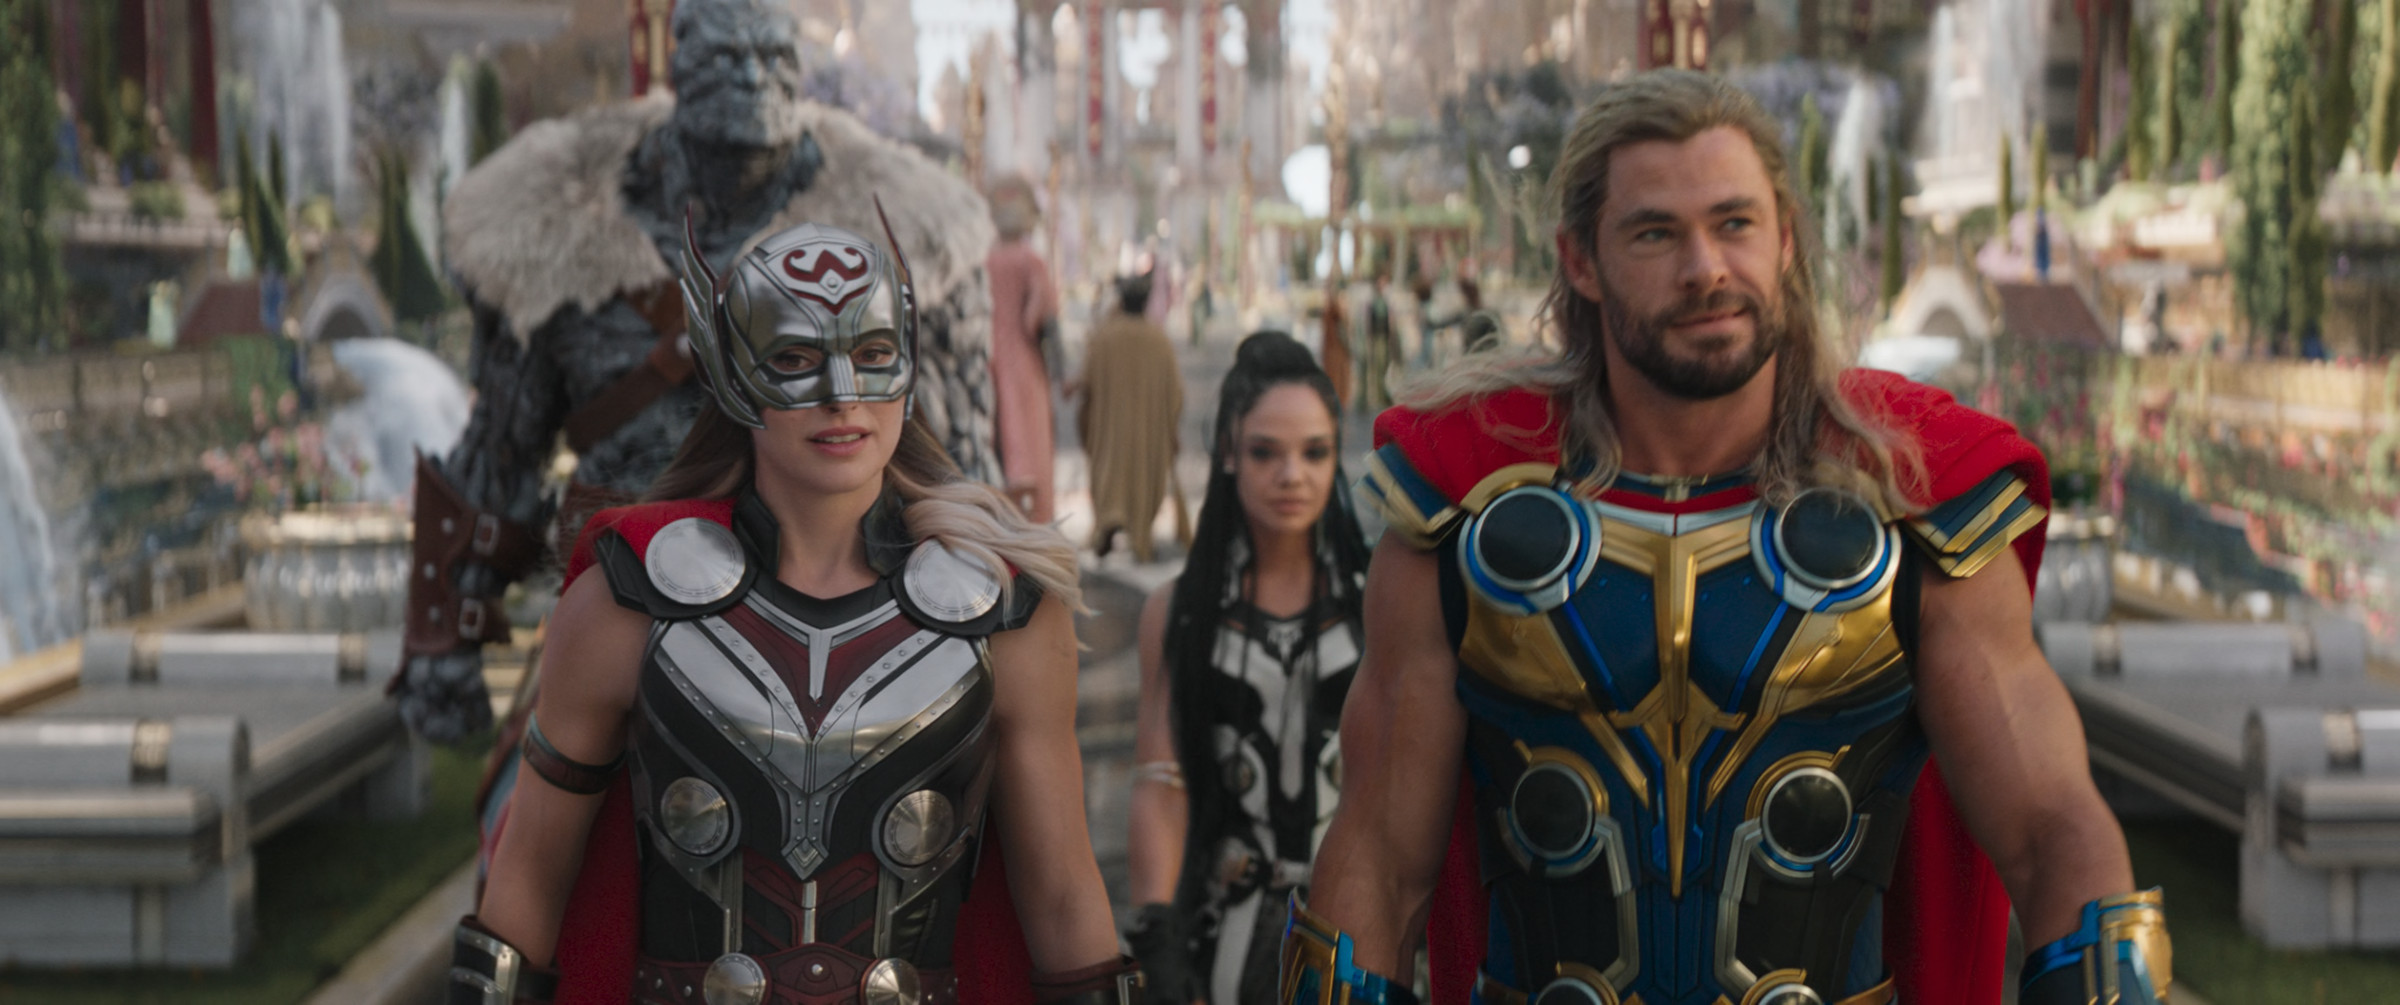 Natalie Portman as Mighty Thor, Tessa Thompson as King Valkyrie, and Chris Hemsworth as Thor.